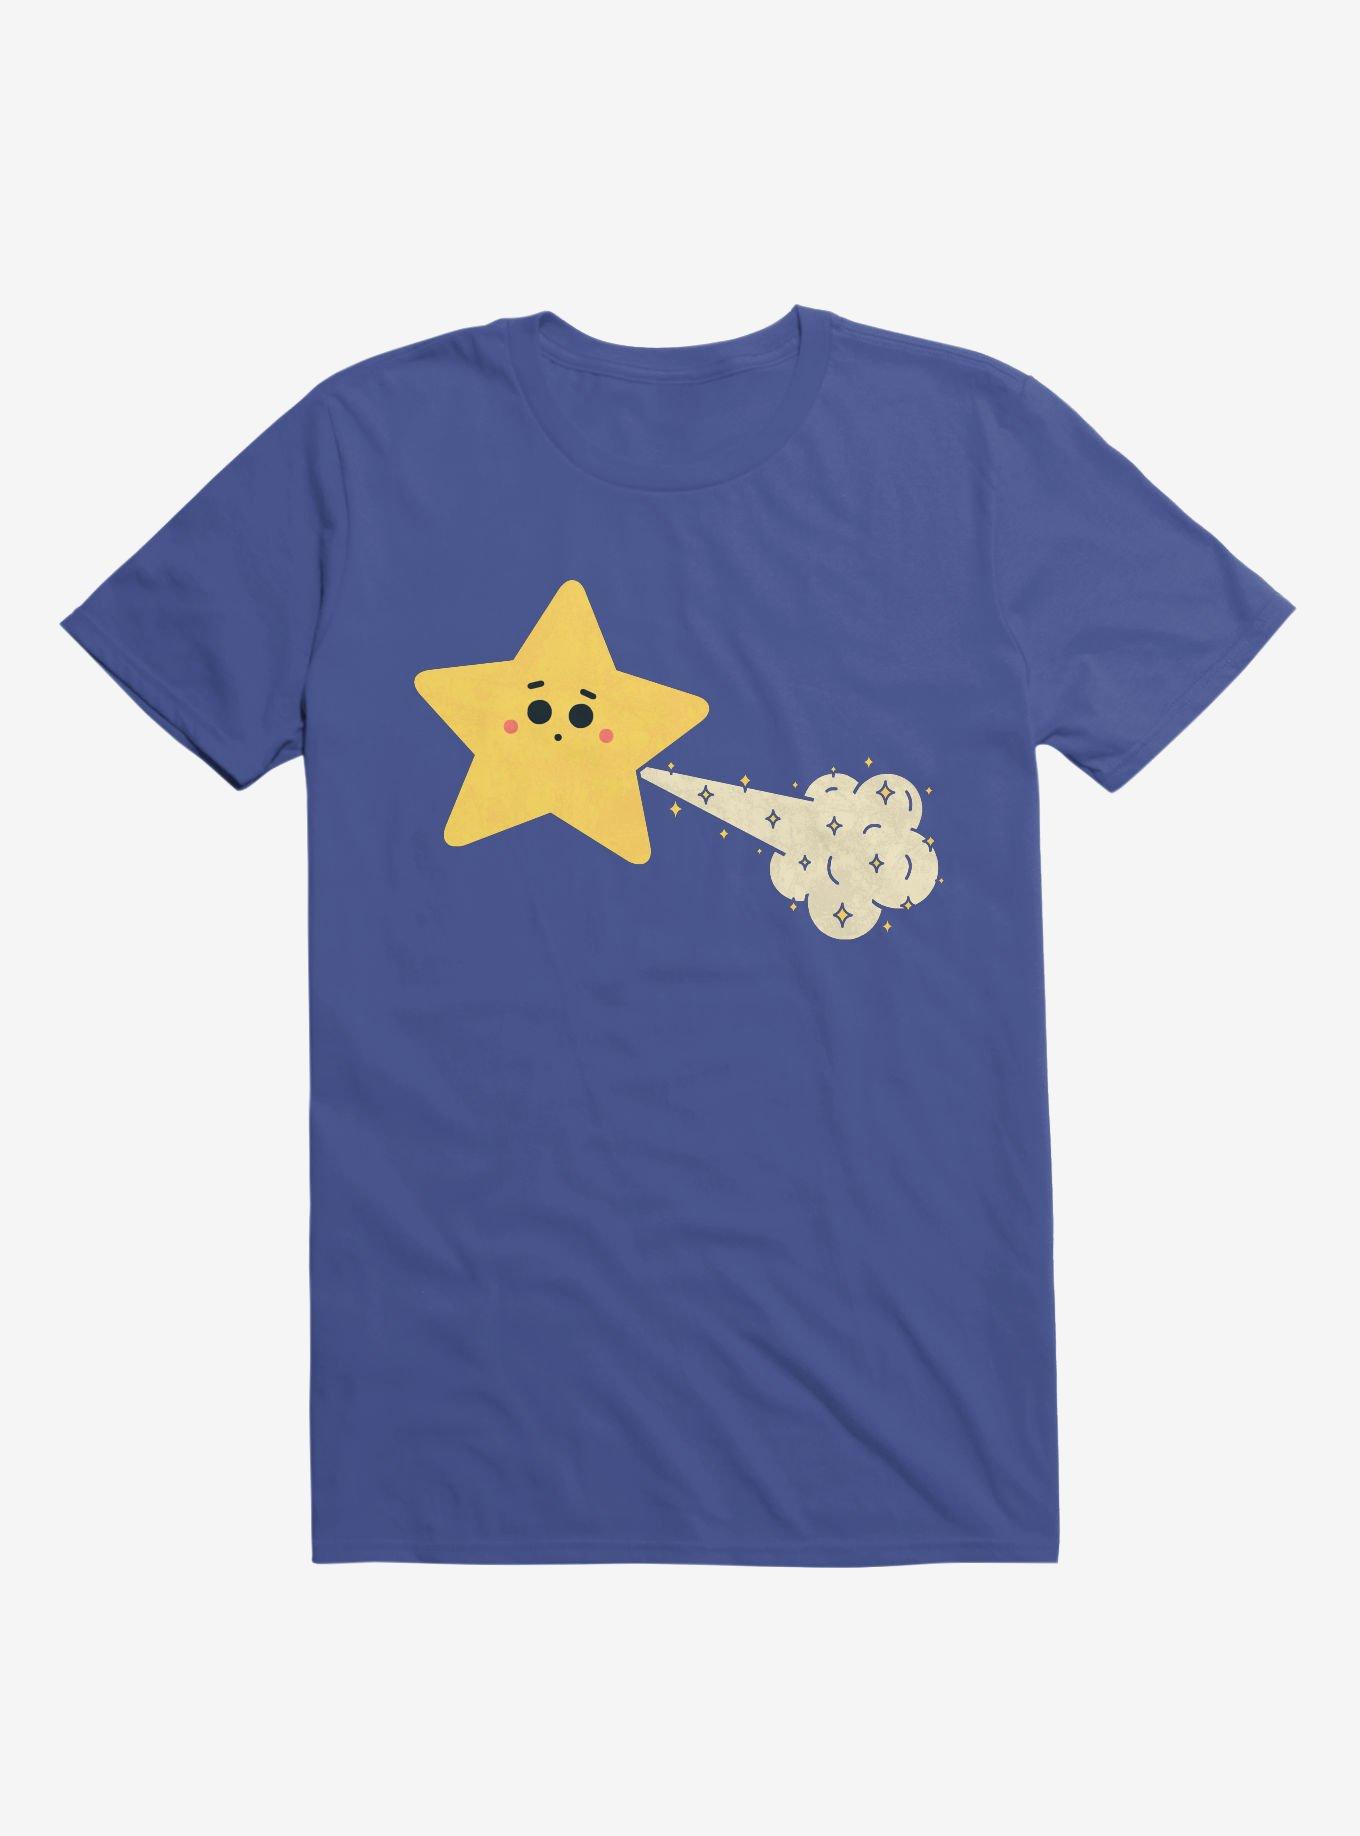 Sparkle Tooting Star Royal Blue T-Shirt, , hi-res